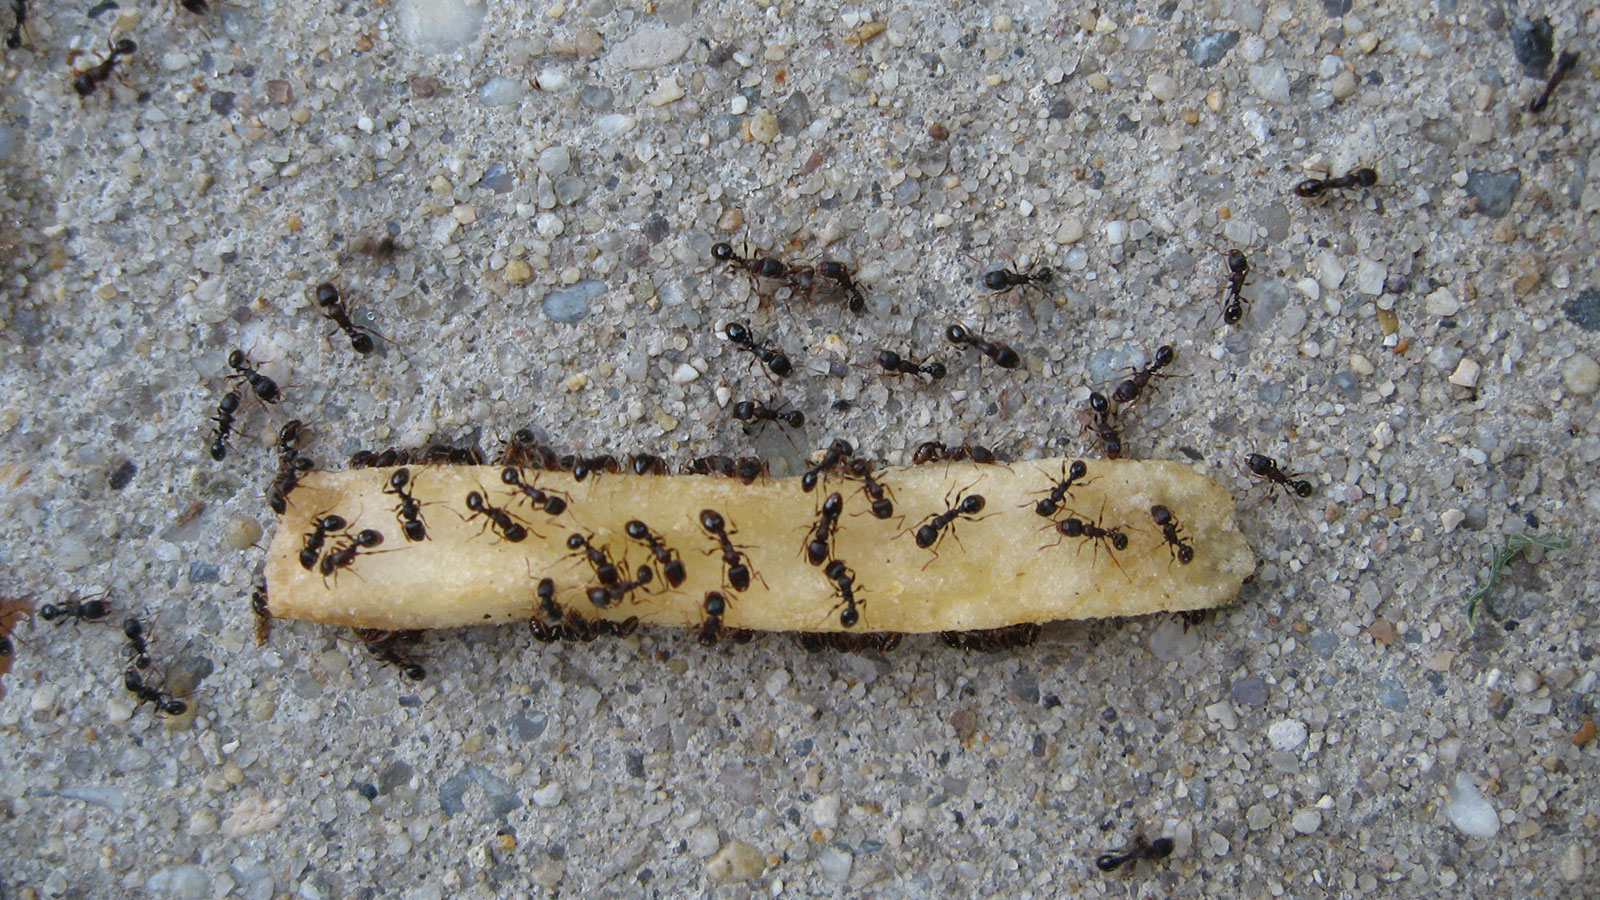 Ants like fries!